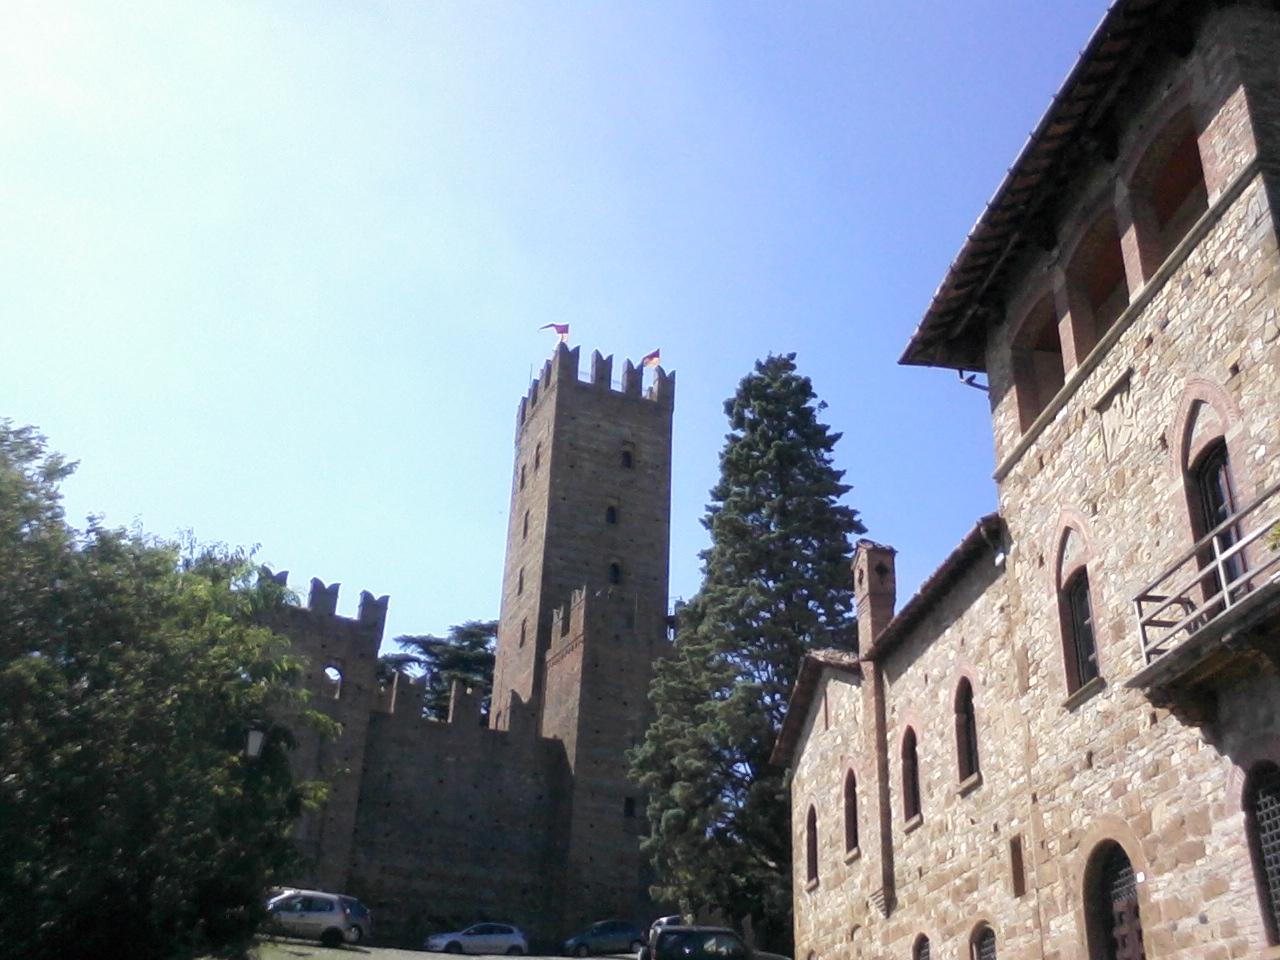 Borgo Castell'Arquato